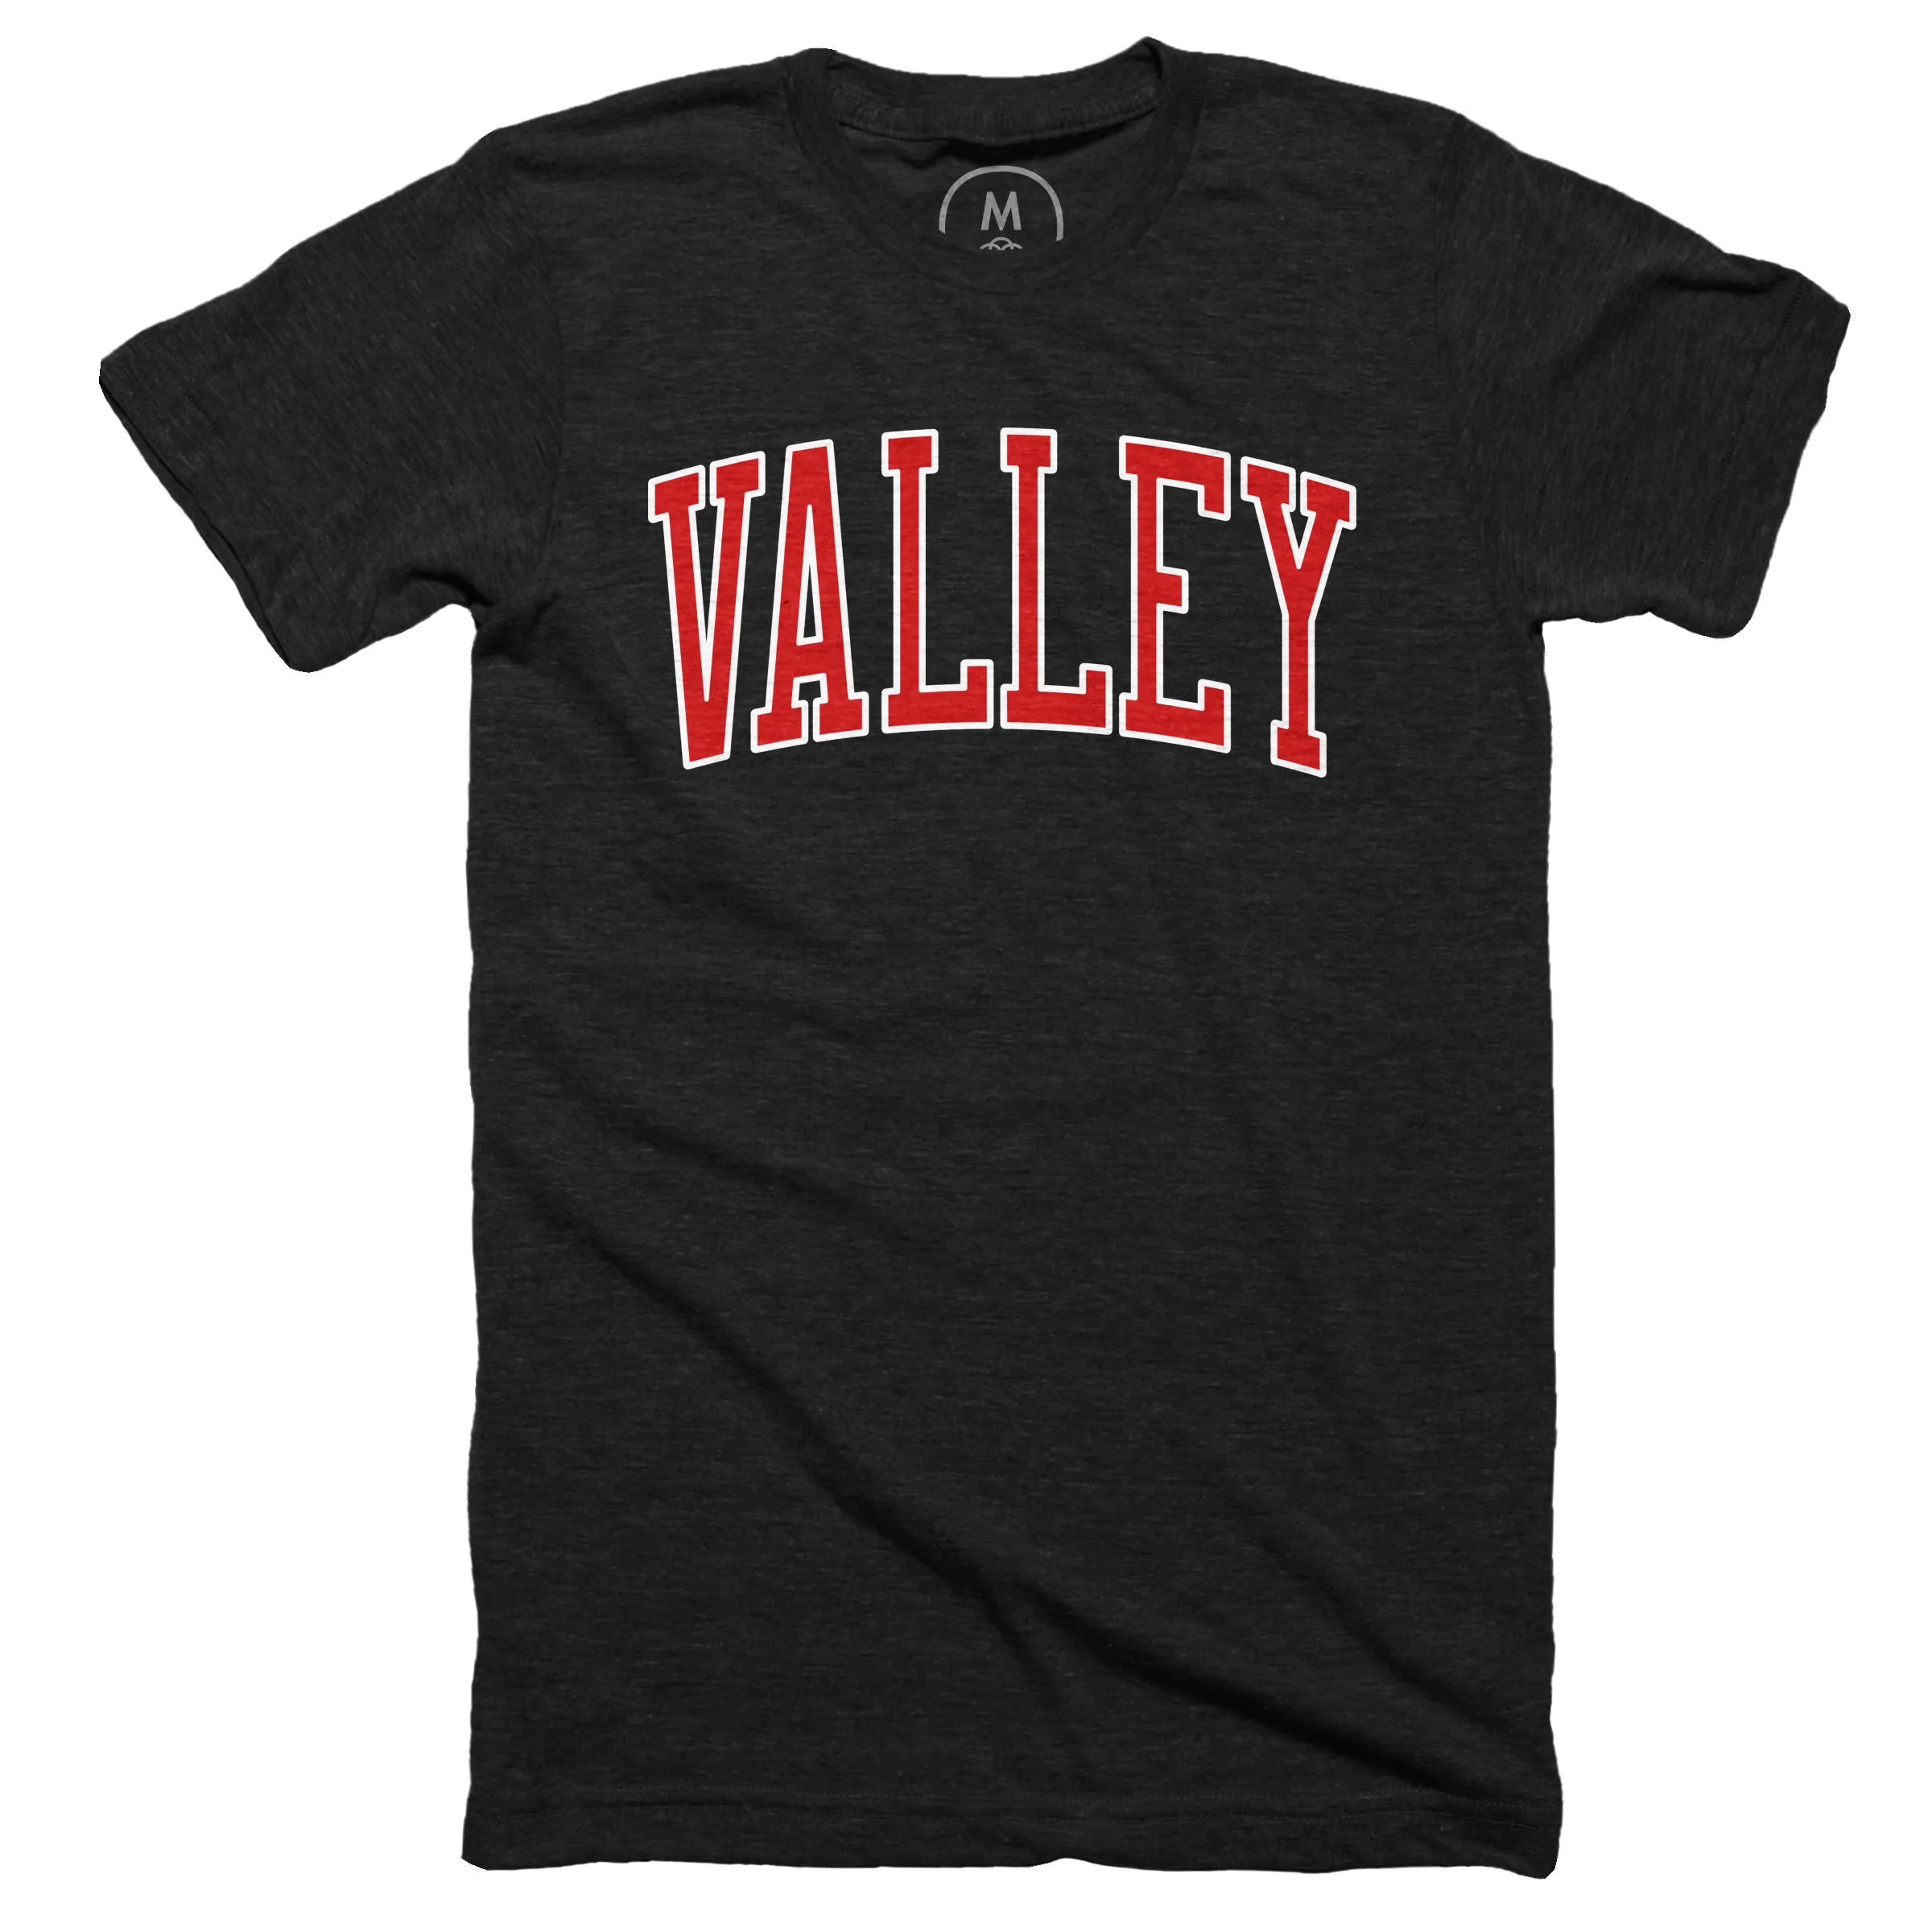 Pauls Valley Sport - Football” graphic tee, pullover crewneck